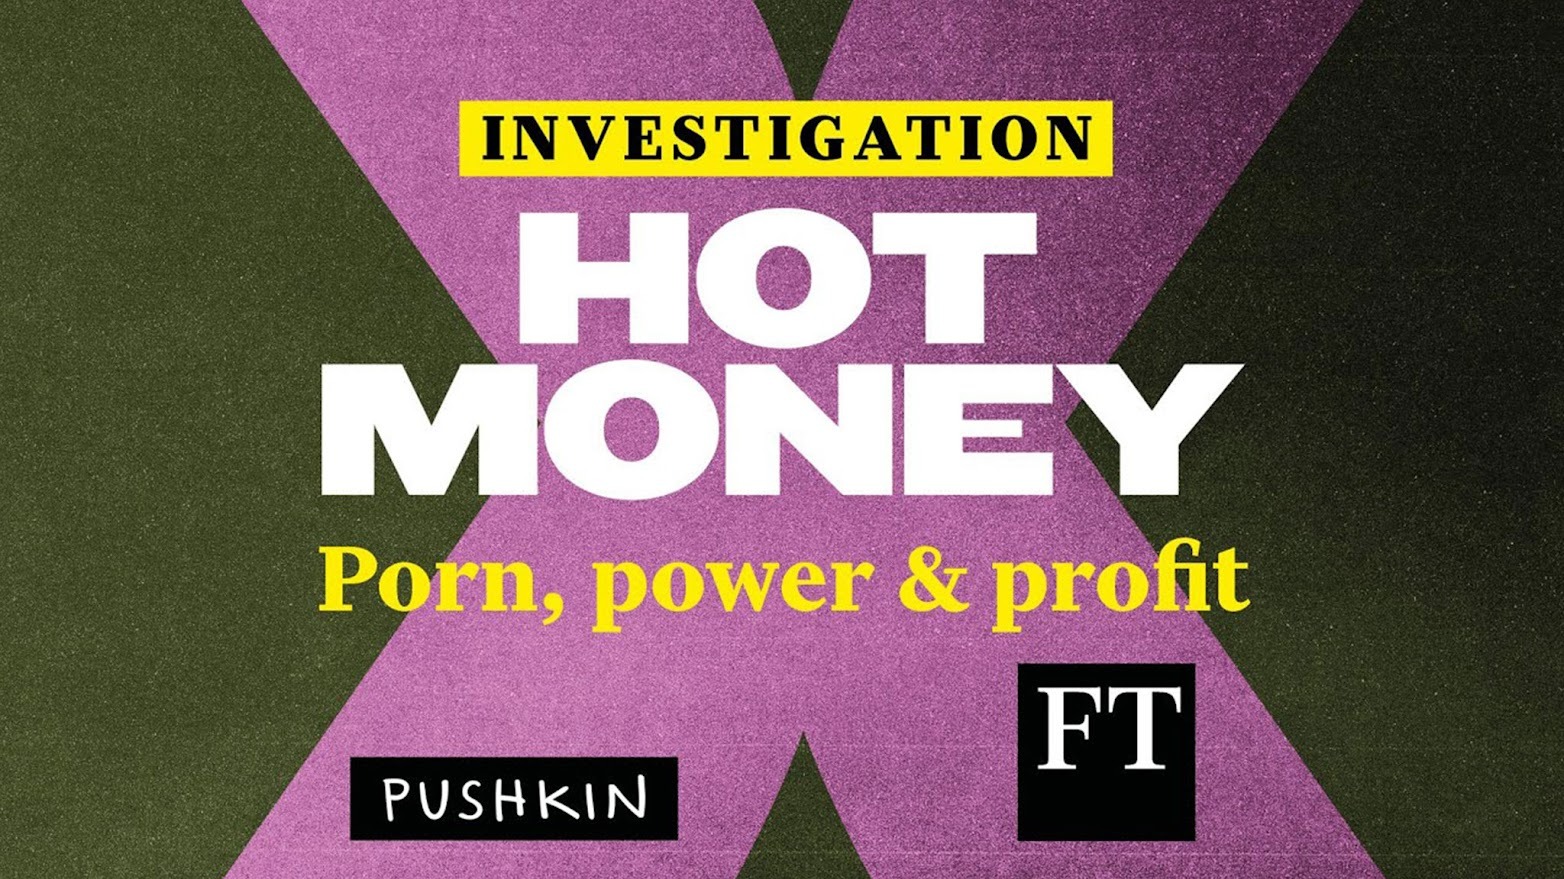 Porn Profits - The billionaire who took down porn | Financial Times